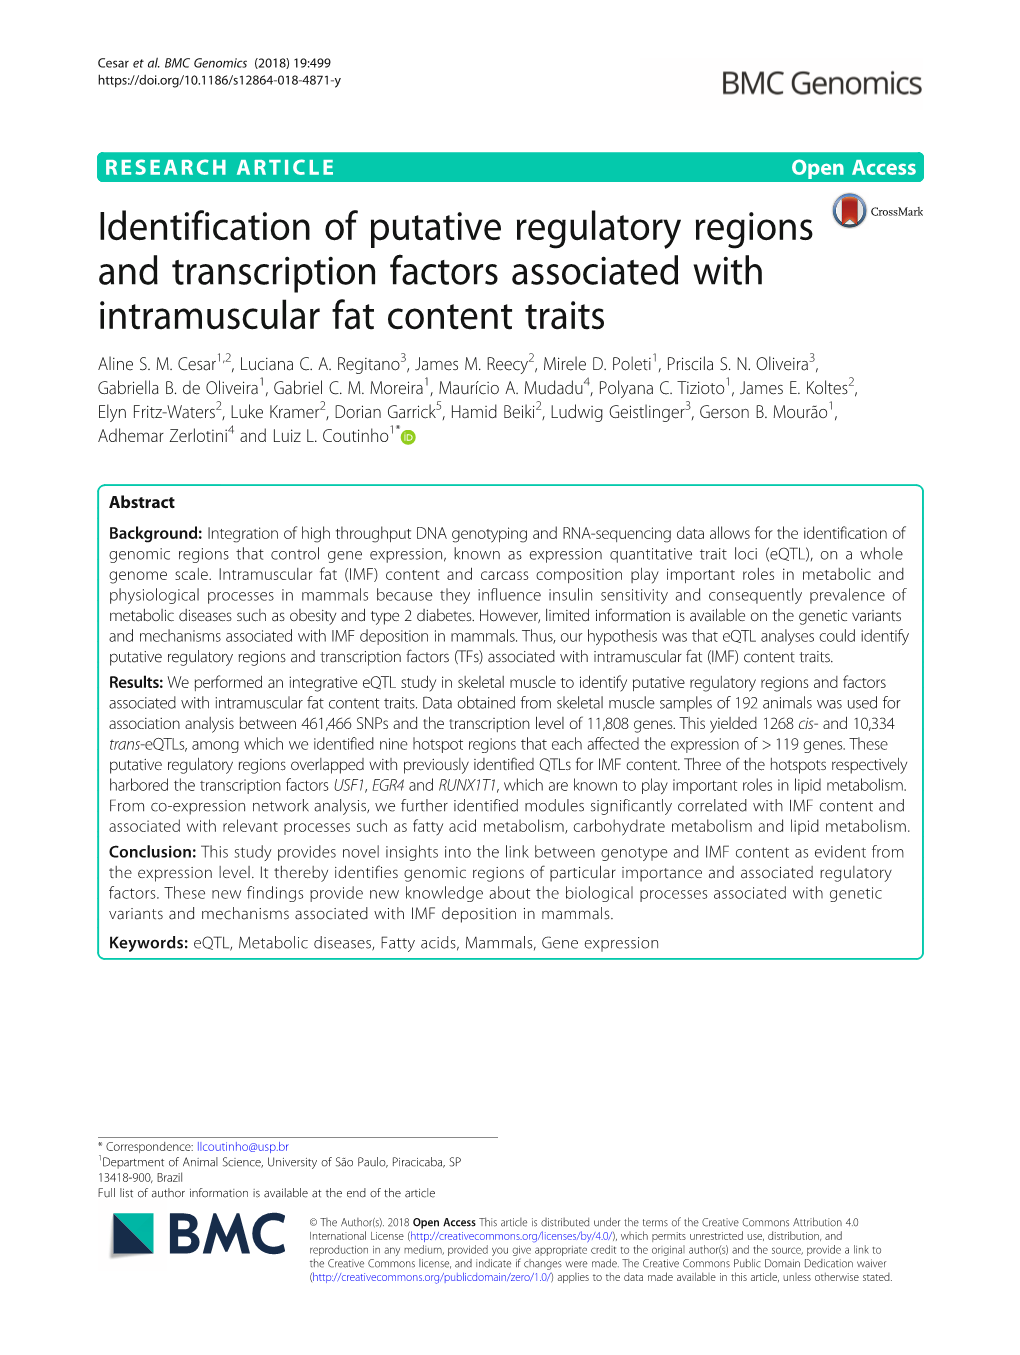 Identification of Putative Regulatory Regions and Transcription Factors Associated with Intramuscular Fat Content Traits Aline S